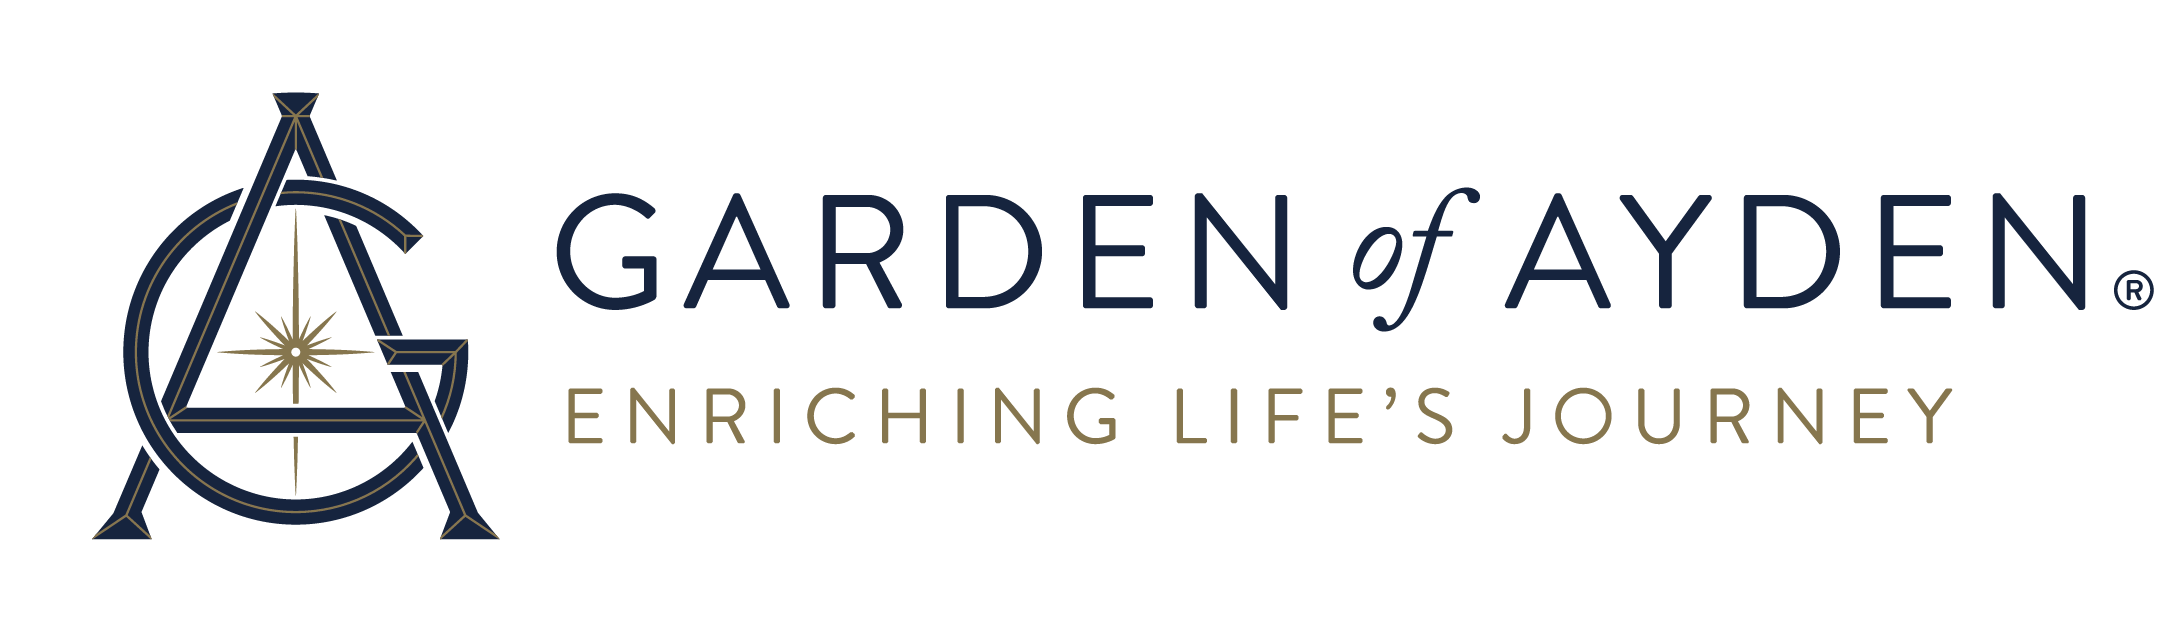 Garden of Ayden logo